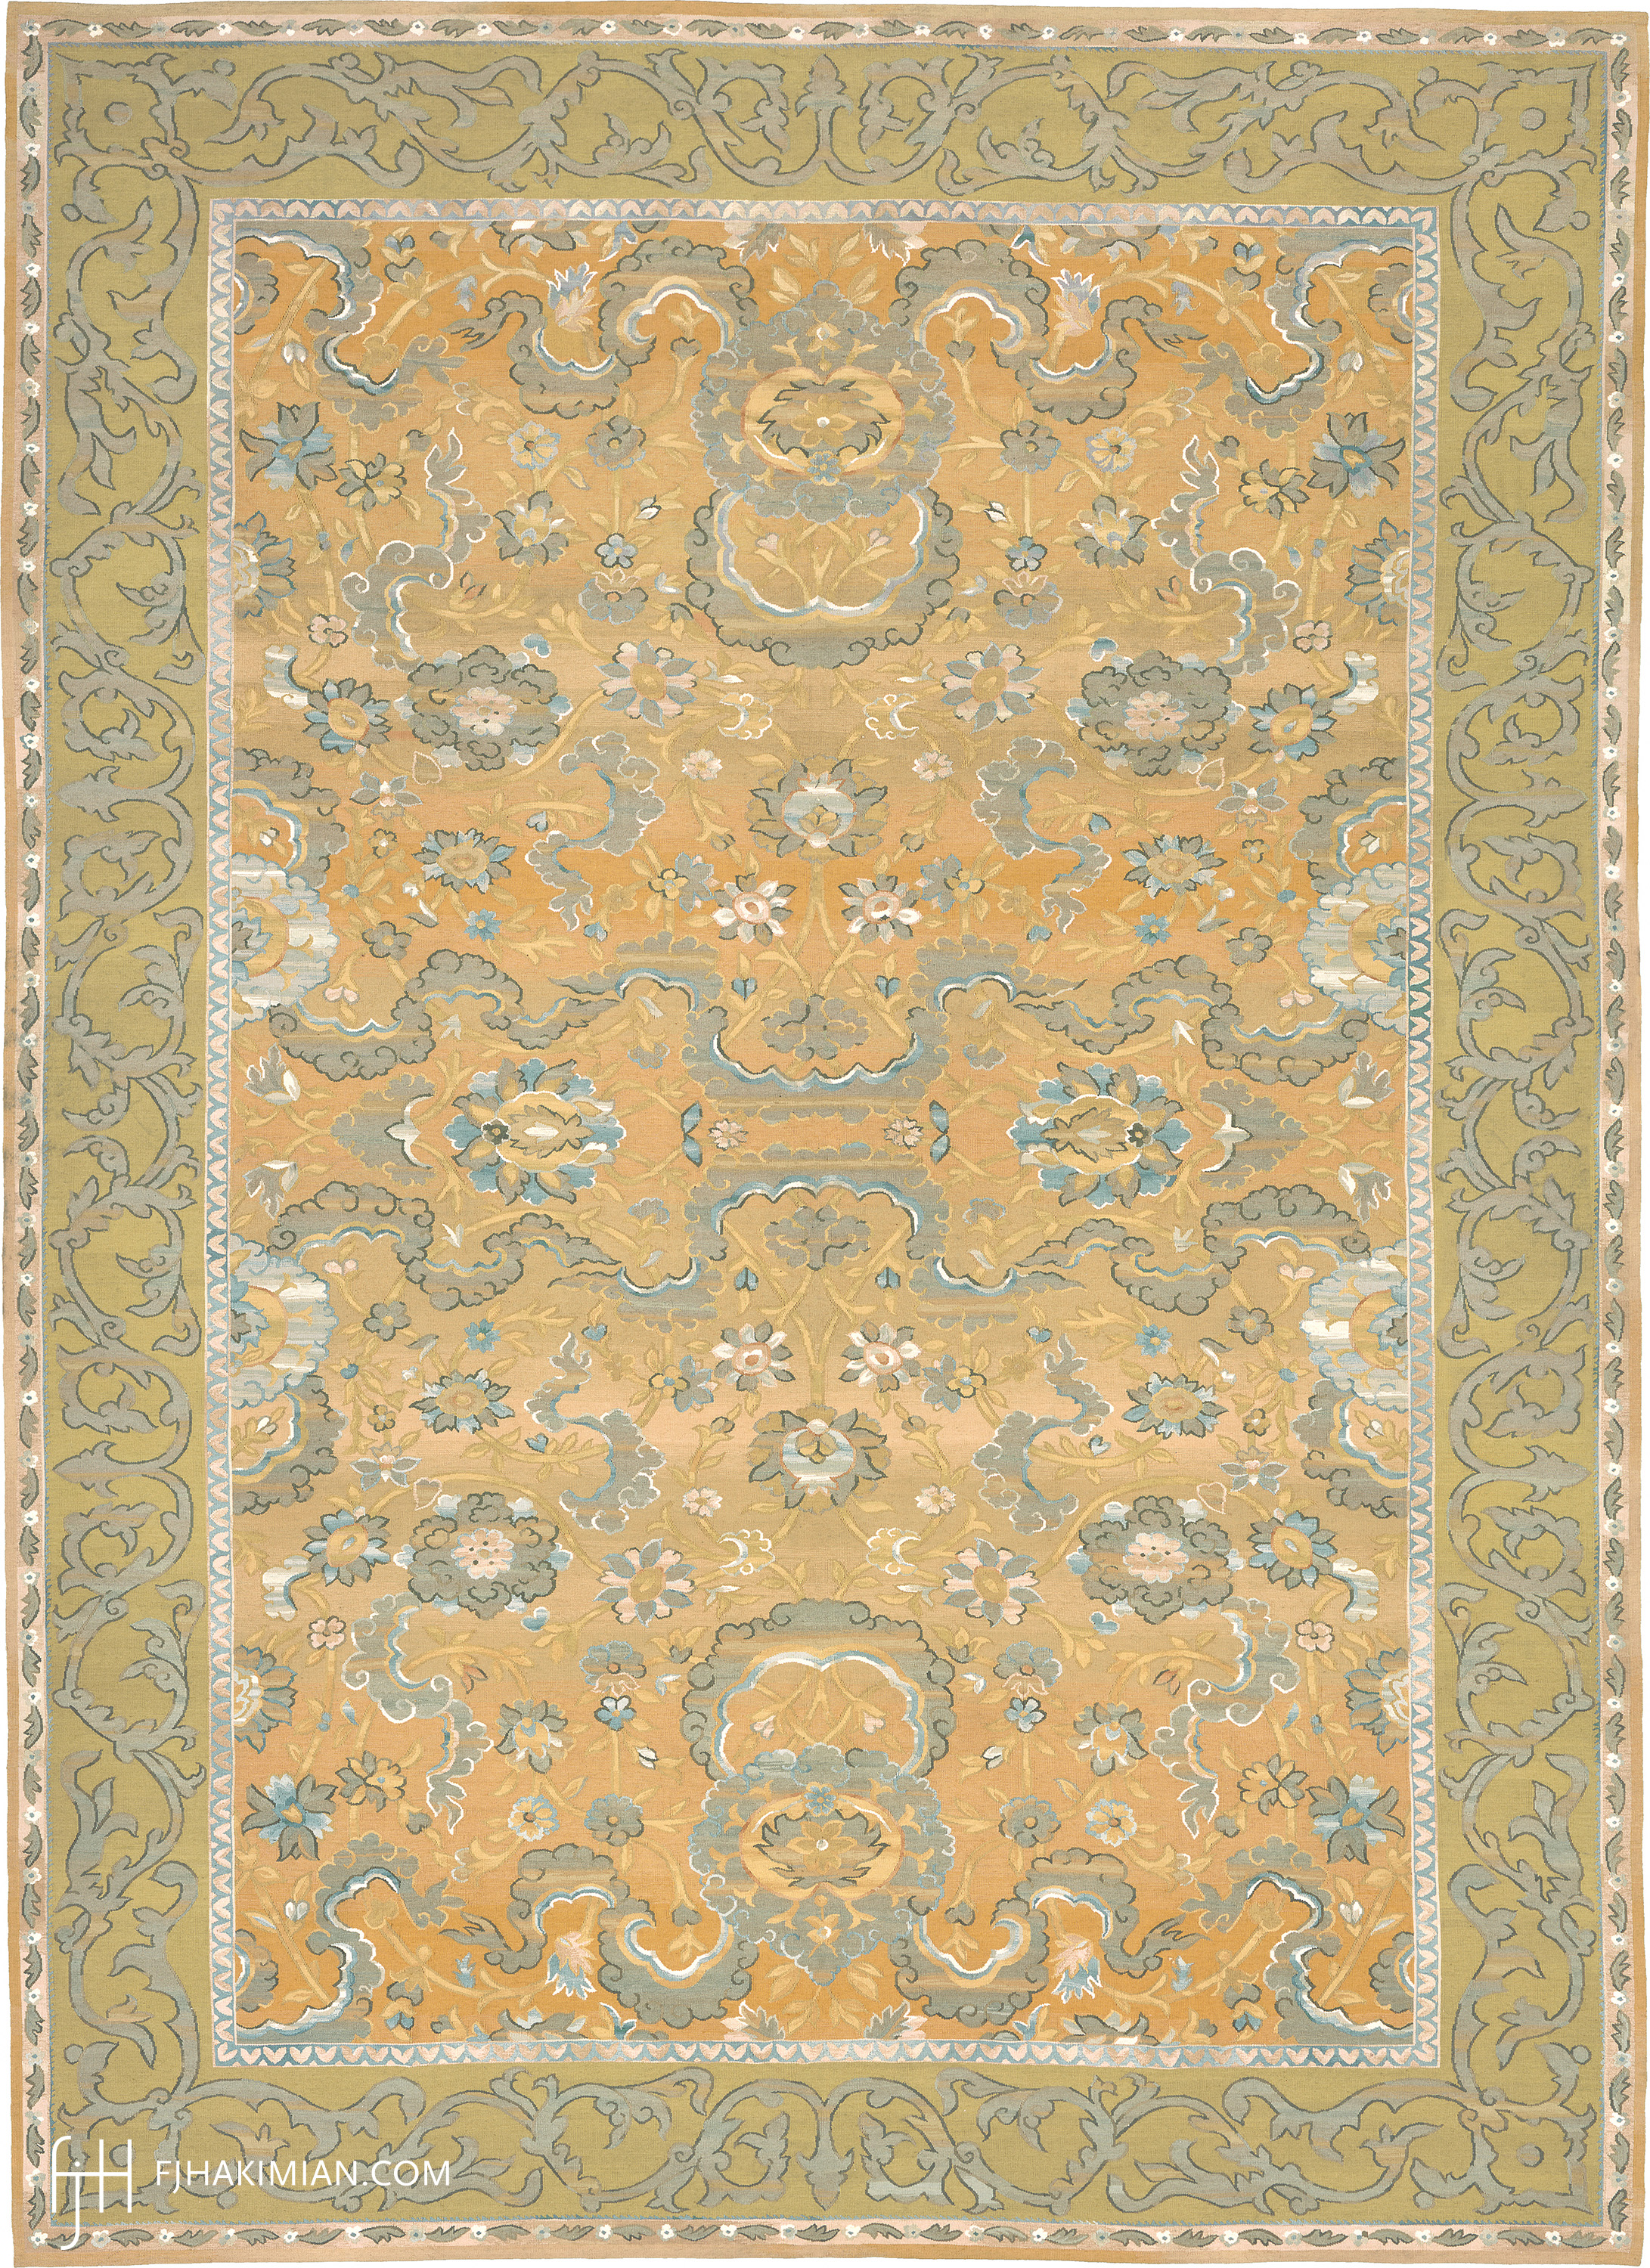 Custom Cumulous Design | FJ Hakimian | Carpet Gallery in NY